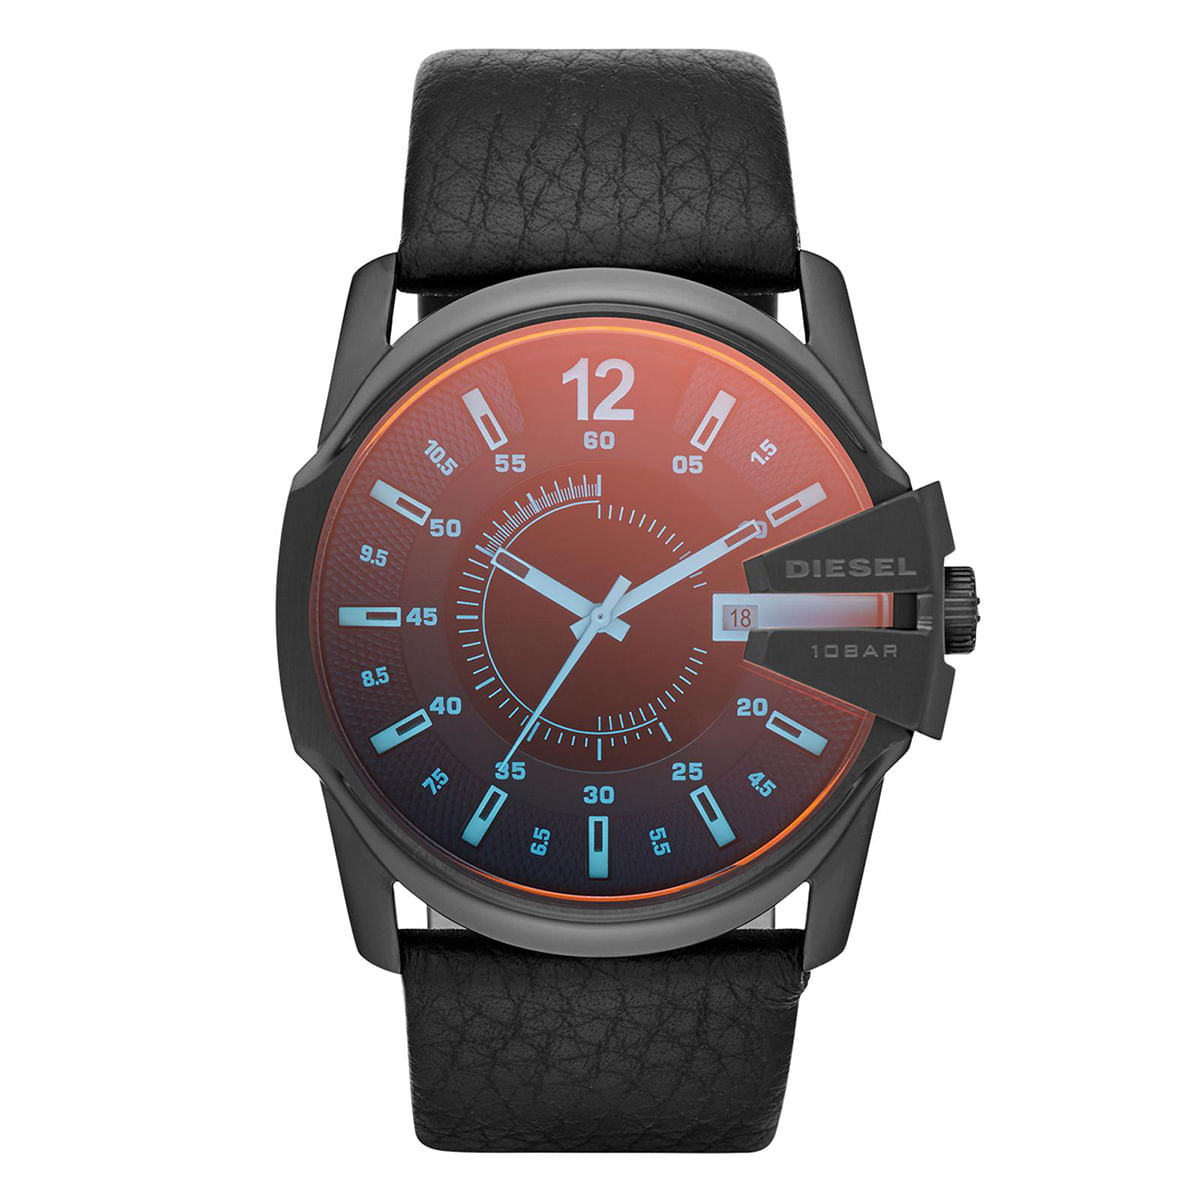 Reloj Diesel - DZ1855 - Hombre - Time Square